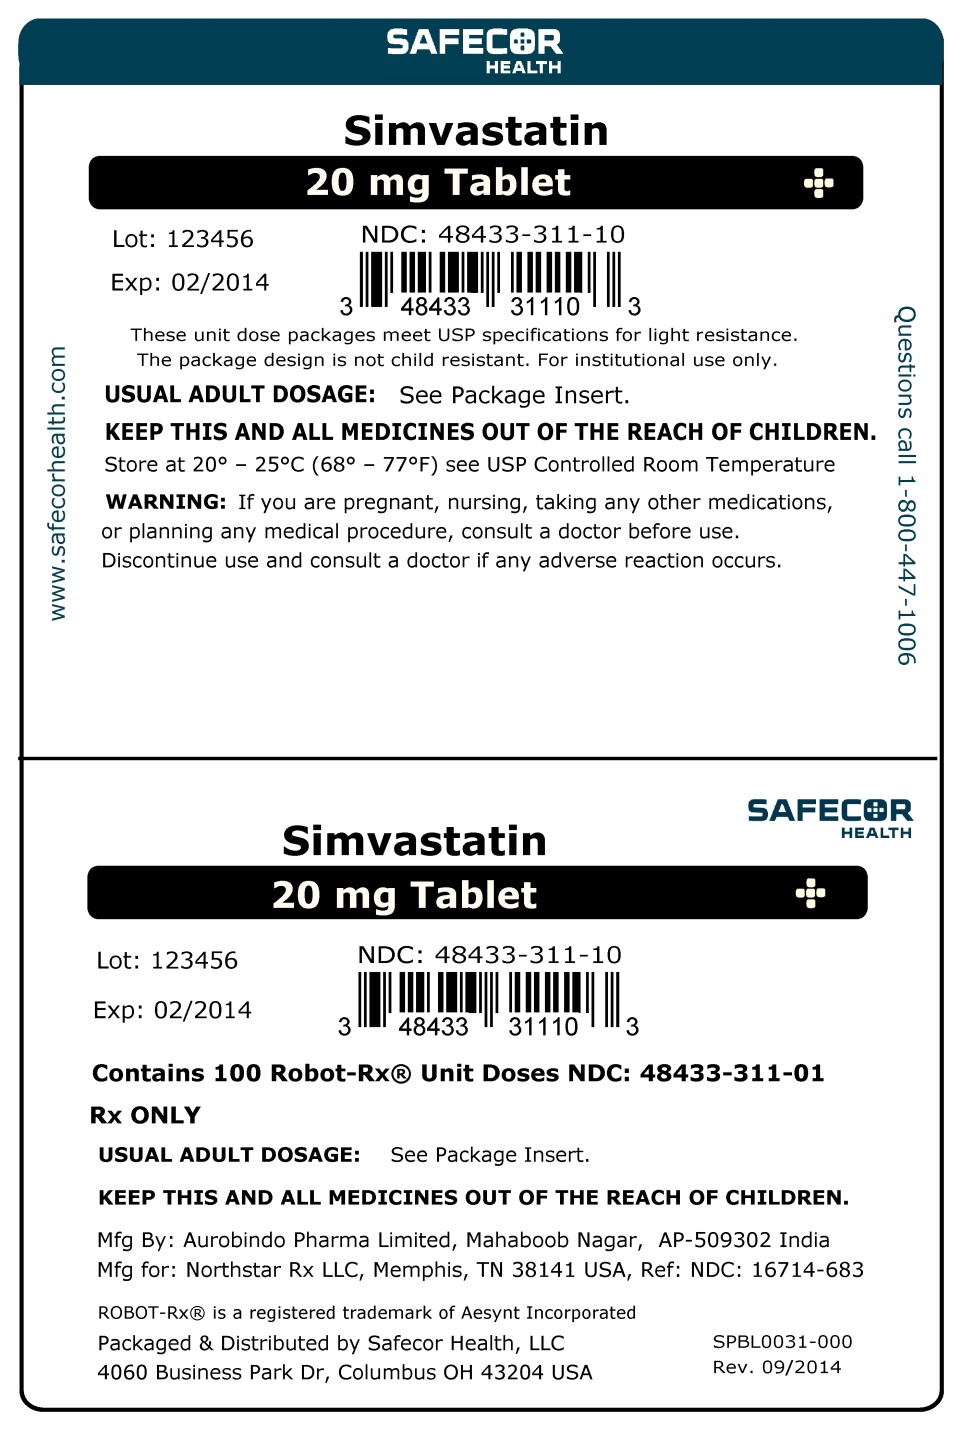 Simvastatin 20 mg Robot Unit Dose Box Label